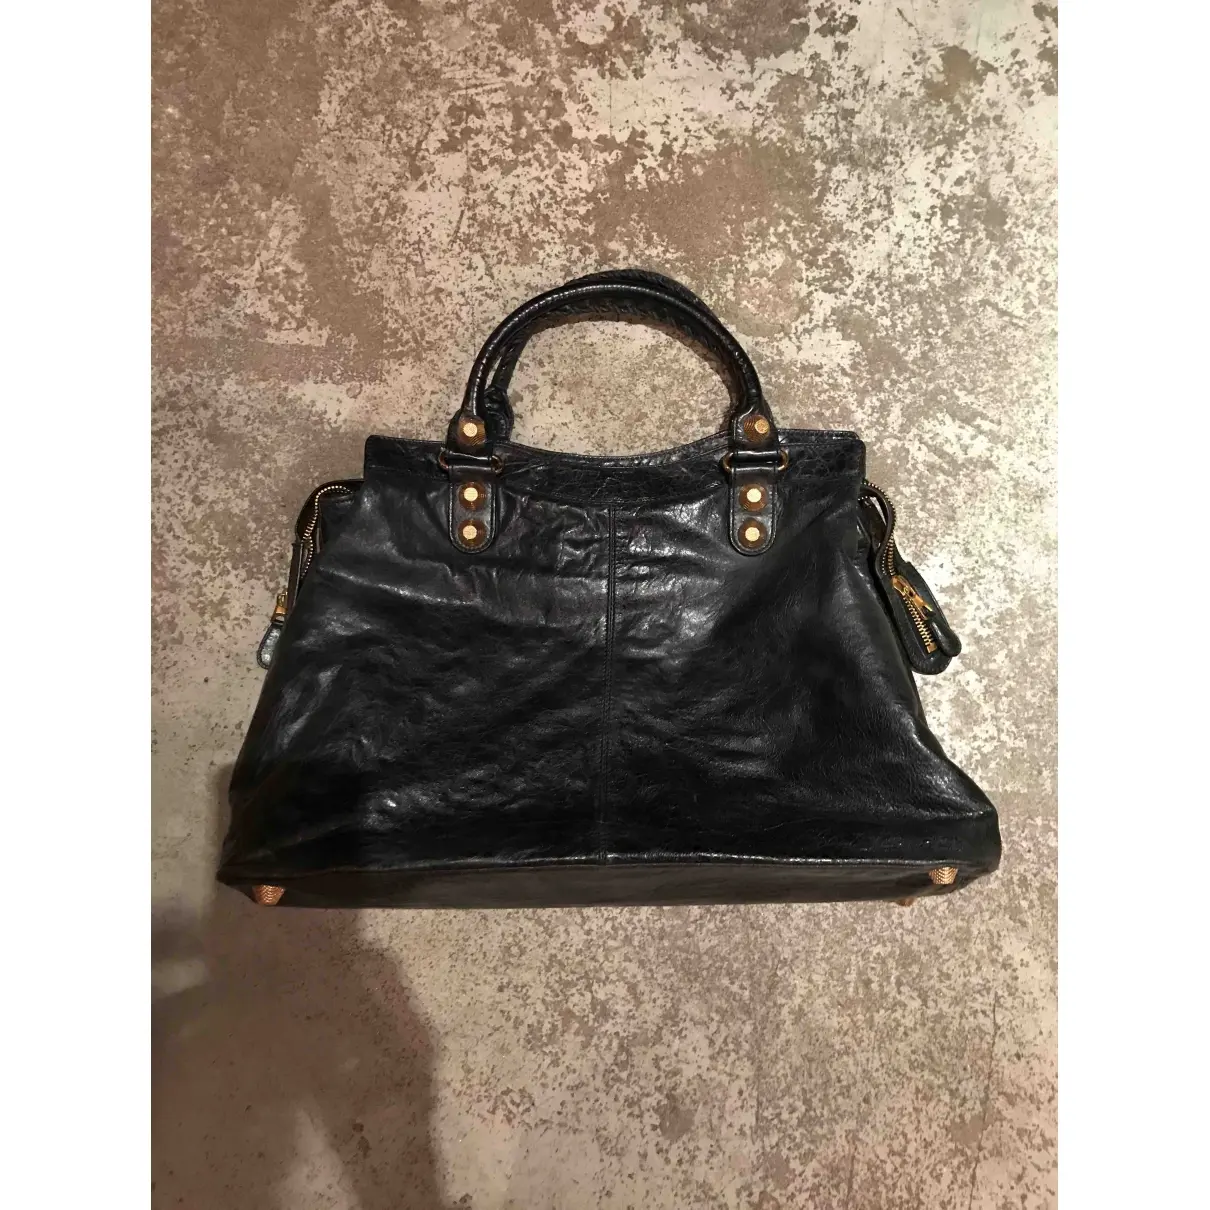 Balenciaga Leather 24h bag for sale